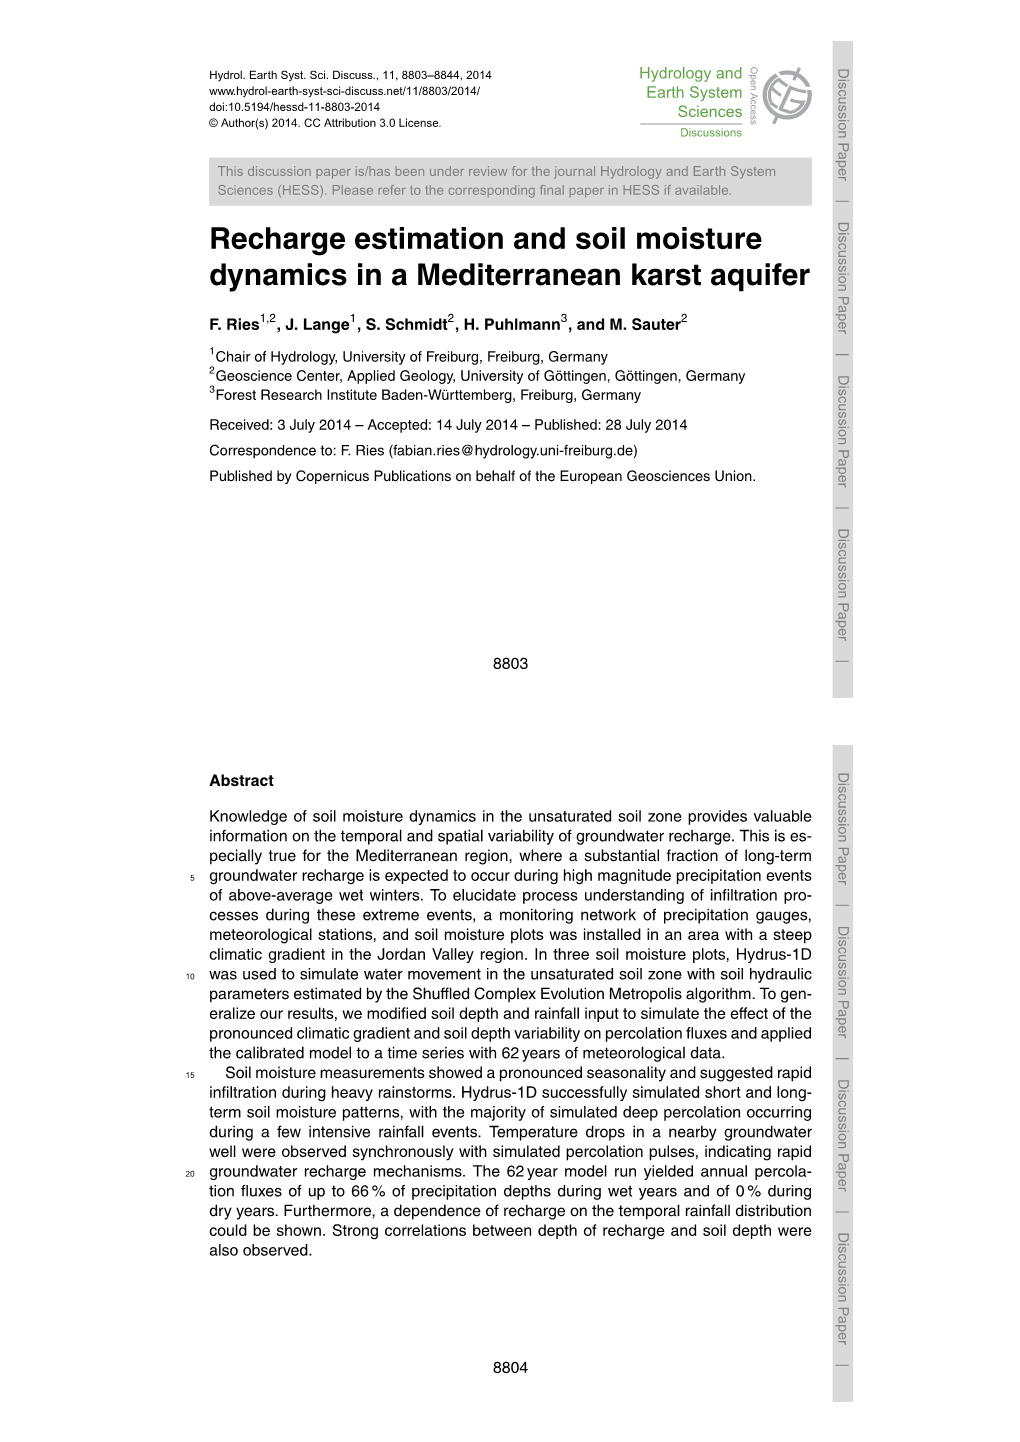 Recharge Estimation and Soil Moisture Dynamics in a Mediterranean Karst Aquifer F